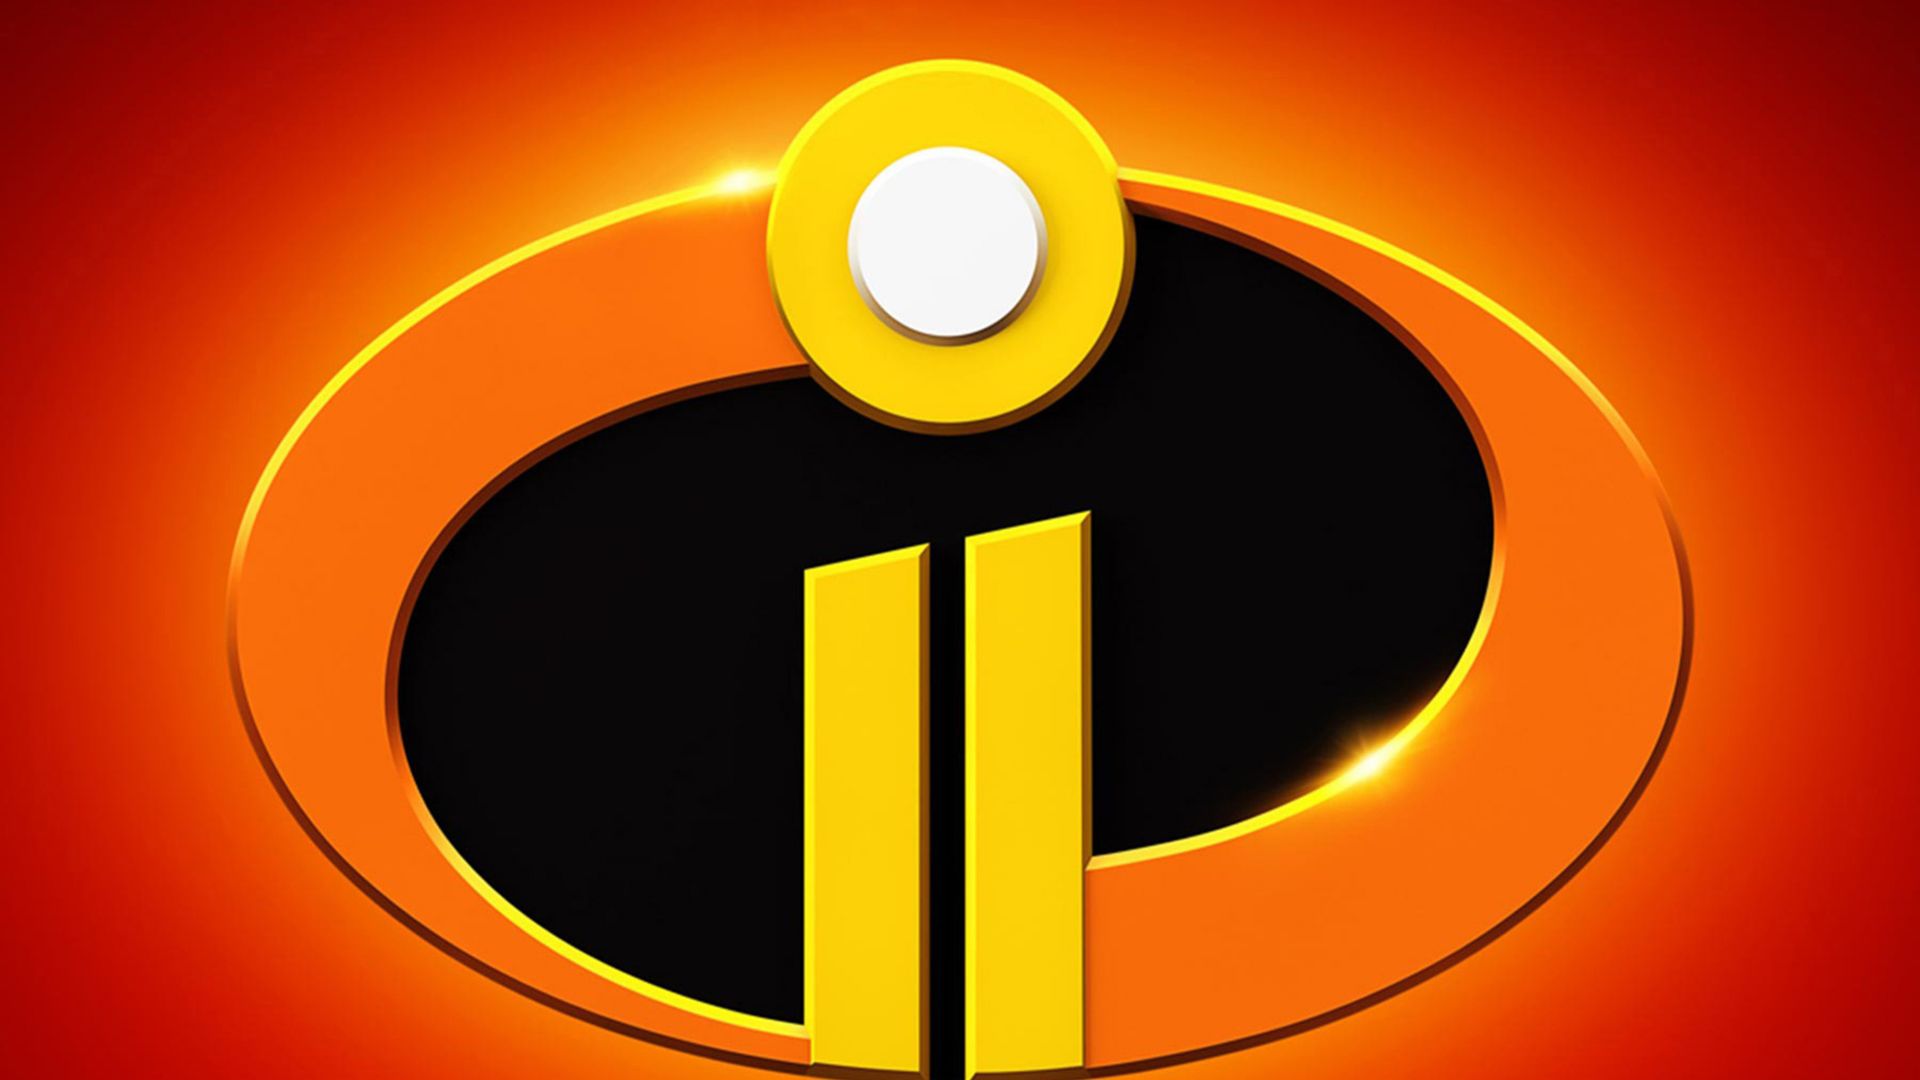 Суперсемейка 2, The Incredibles 2, 4k (horizontal)